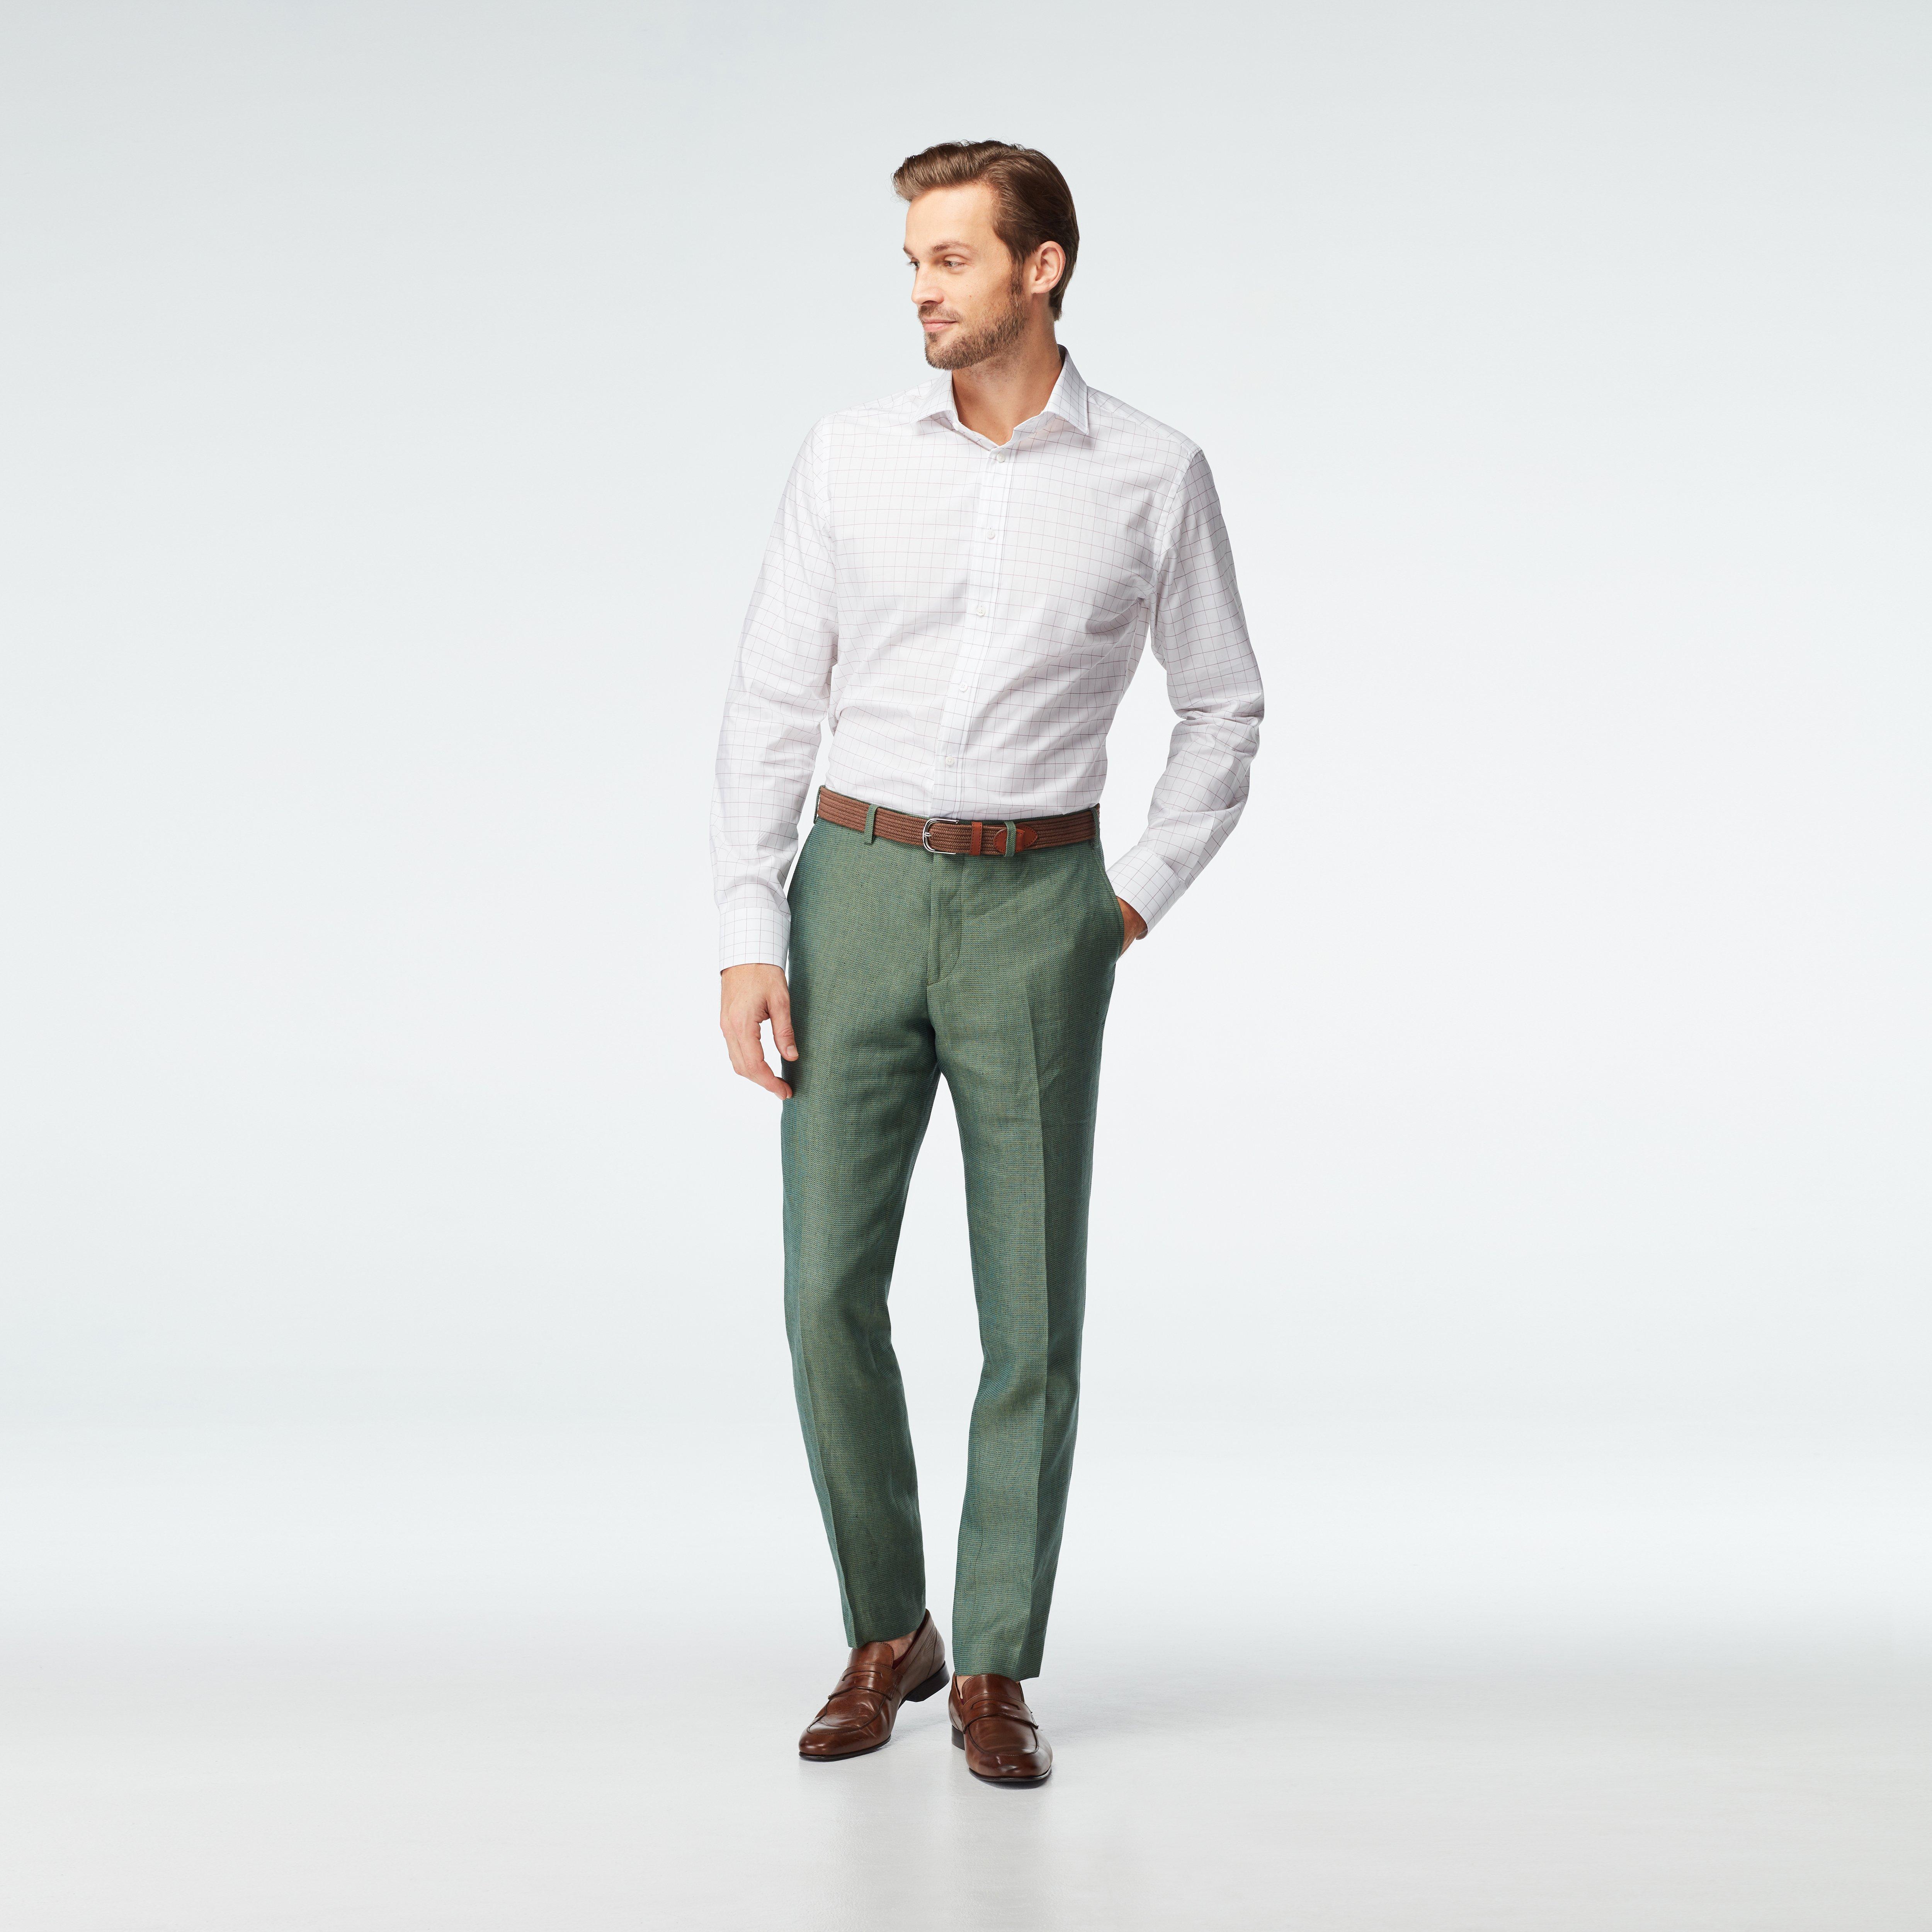 CHEER PAT Cotton Flex Stretchble Slim Fit Regular Casual Cigarette Pant  Trouser for Girls/Ladies/Women (Dark Green)